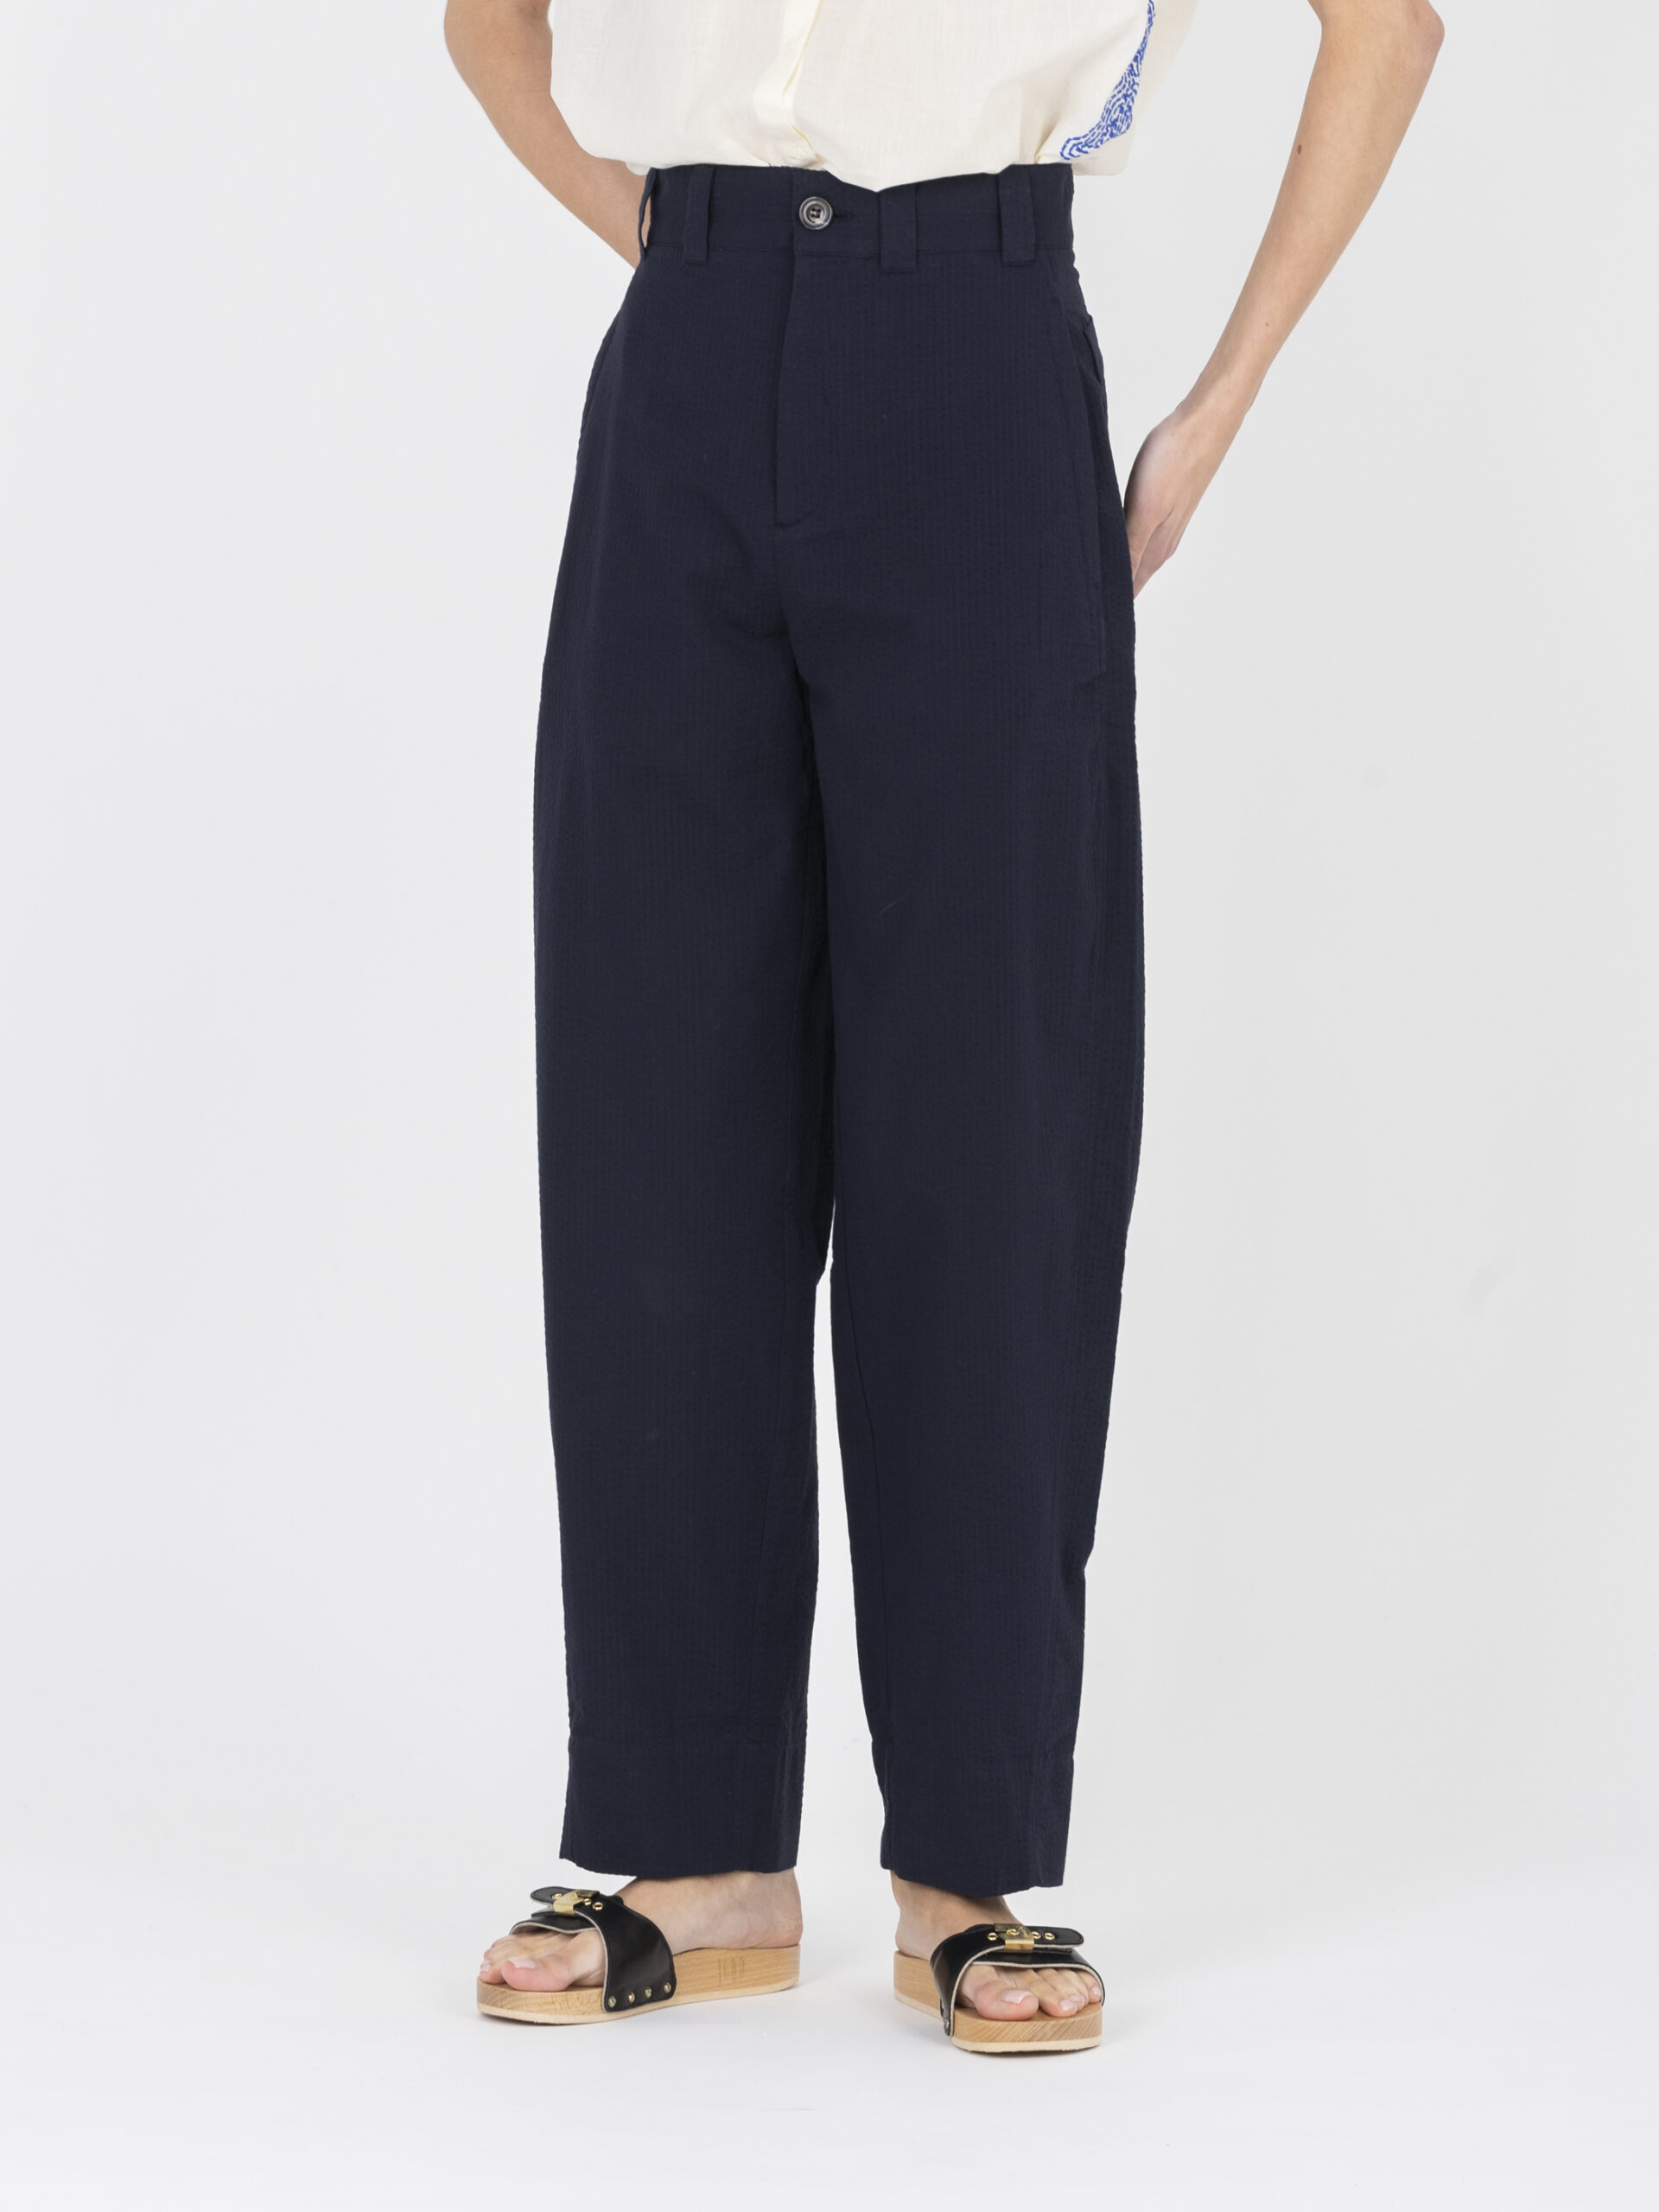 alouette-pants-navy-sheersucker-cotton-curved-high-waisted-soeur-matchboxathens